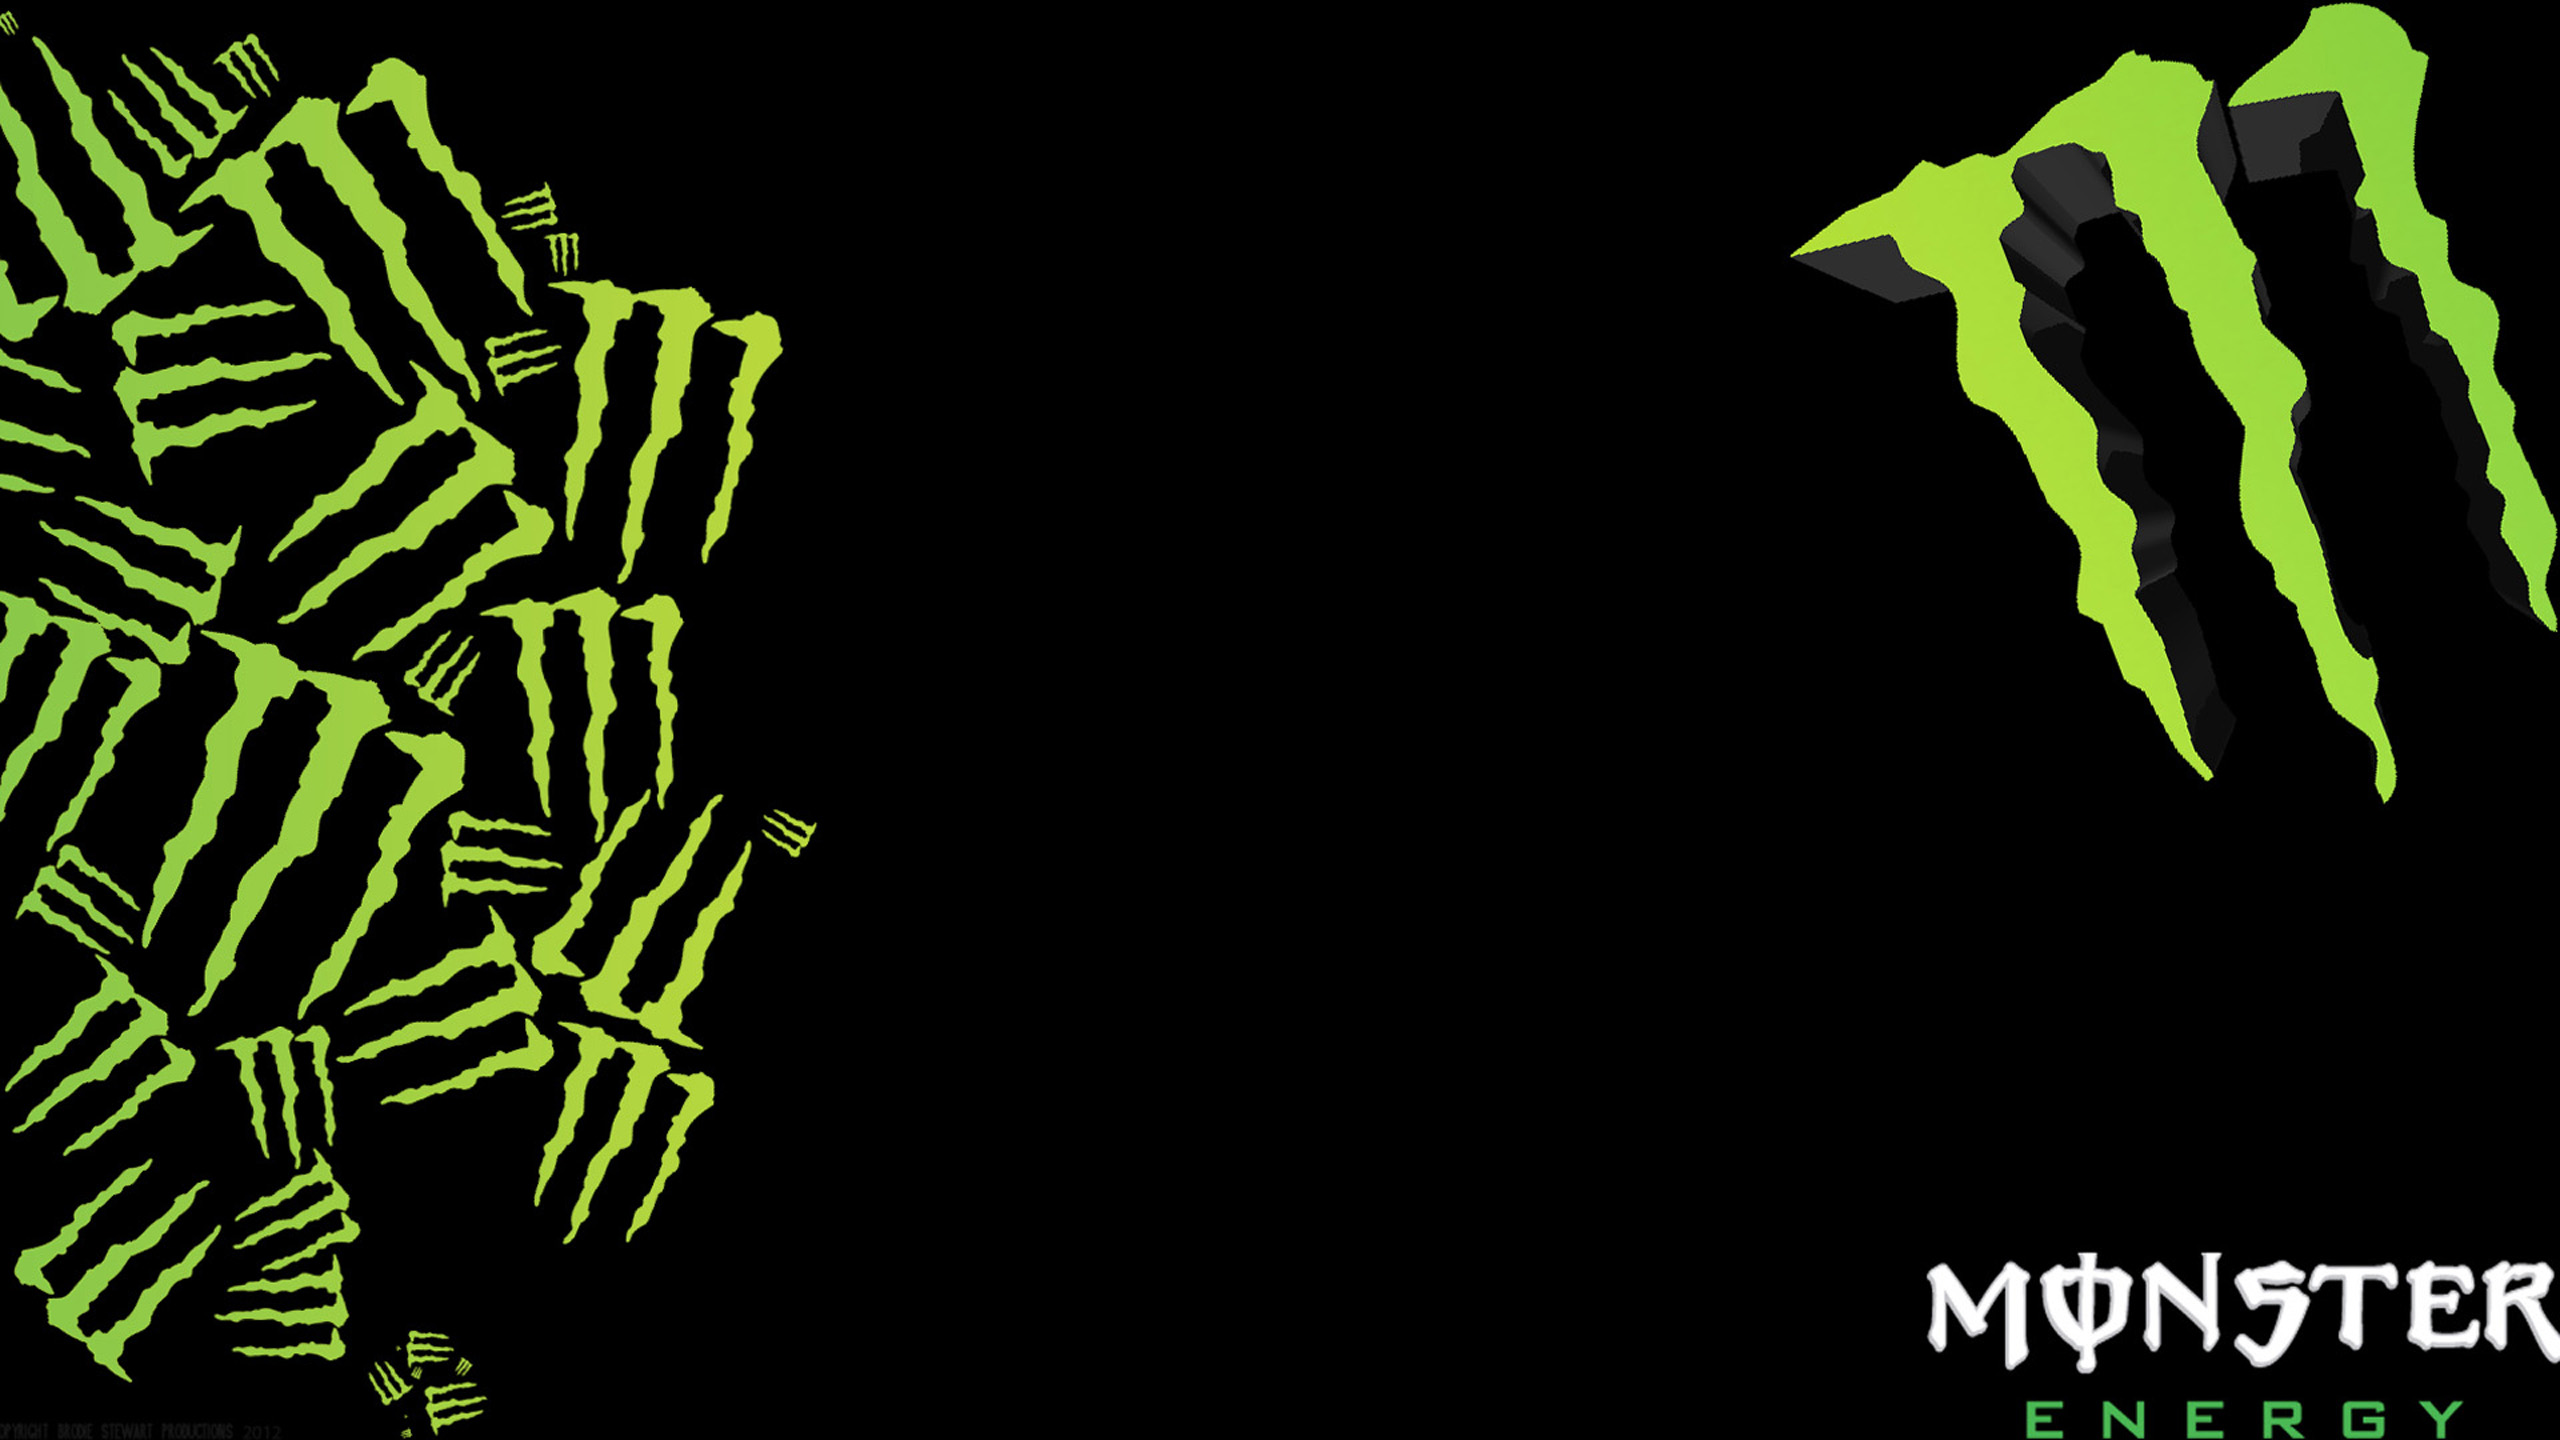 Monster logo wallpaper 06, HD Desktop Wallpapers